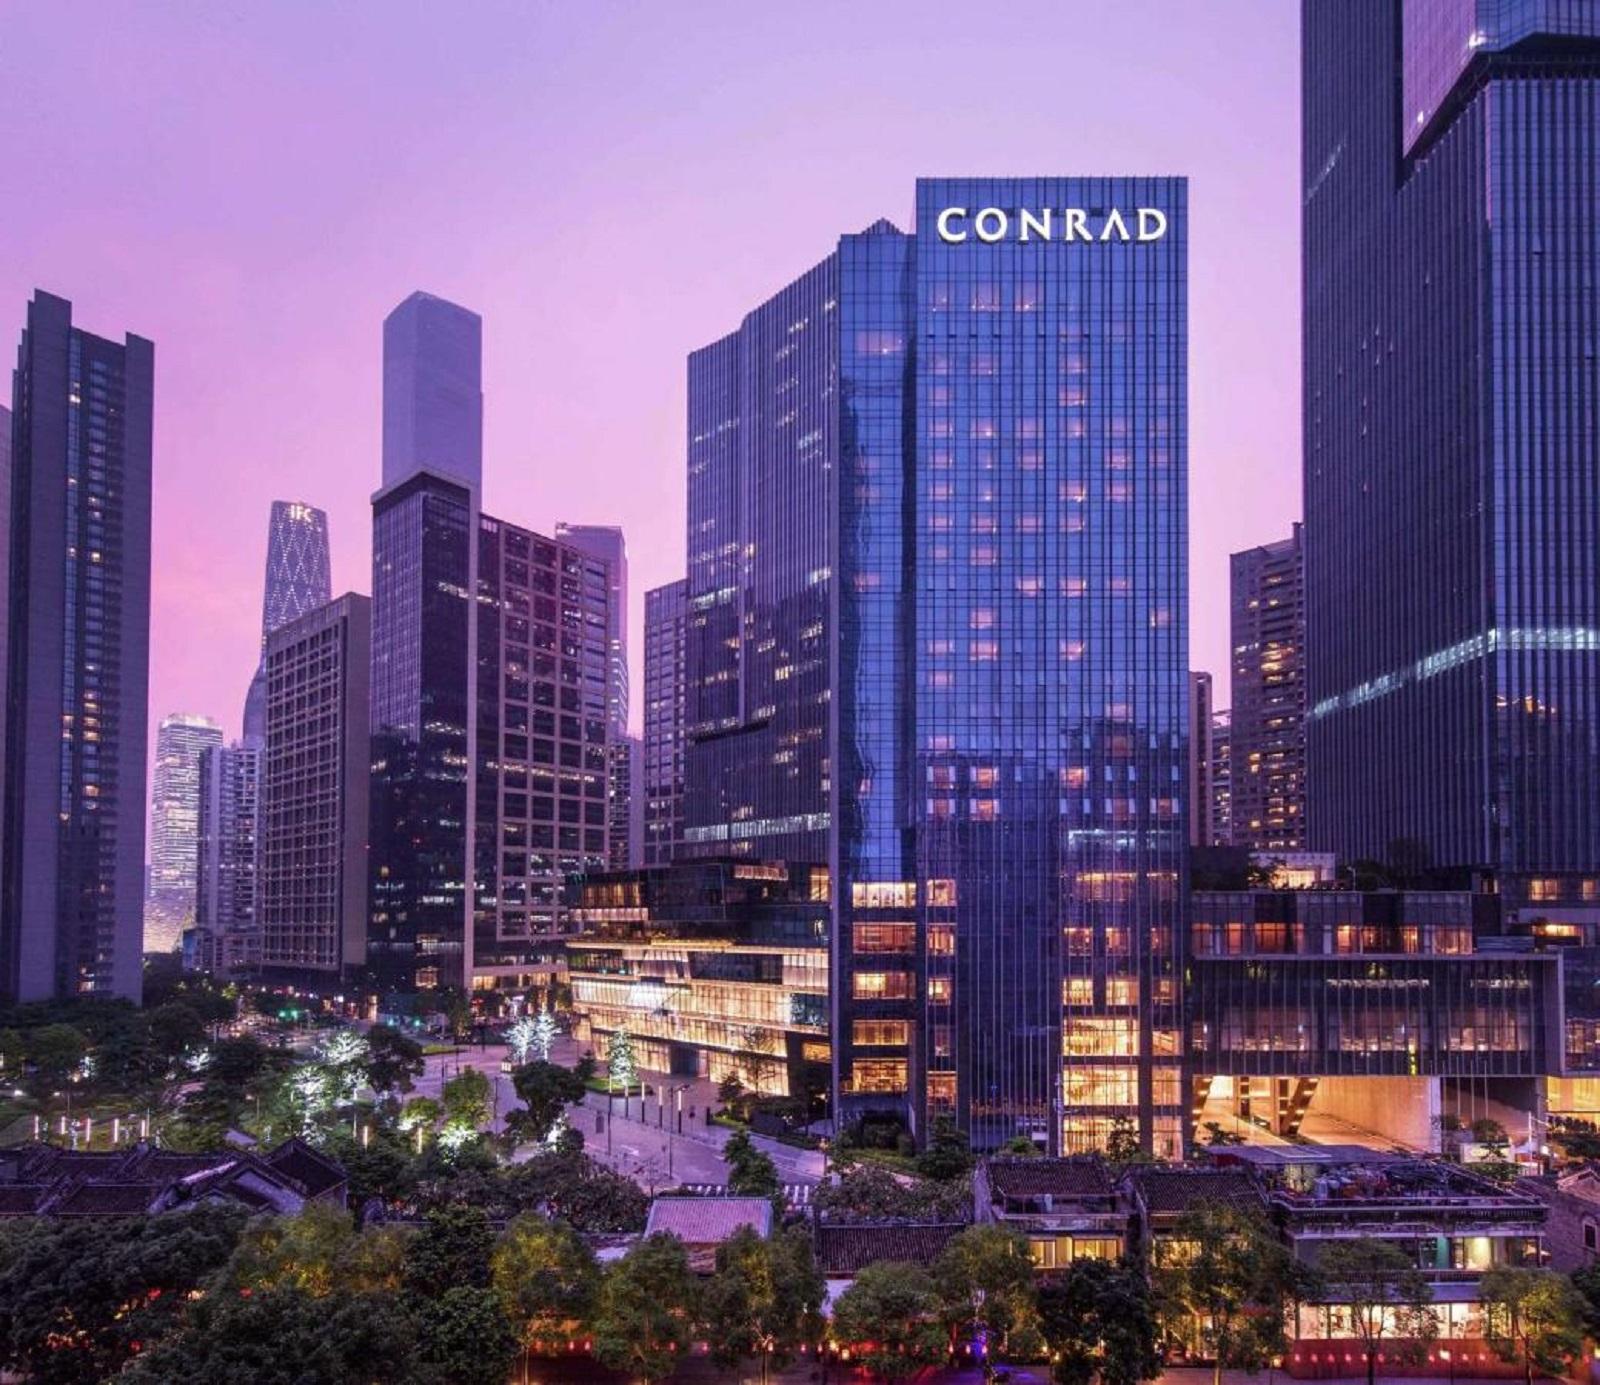 Conrad Guangzhou Building